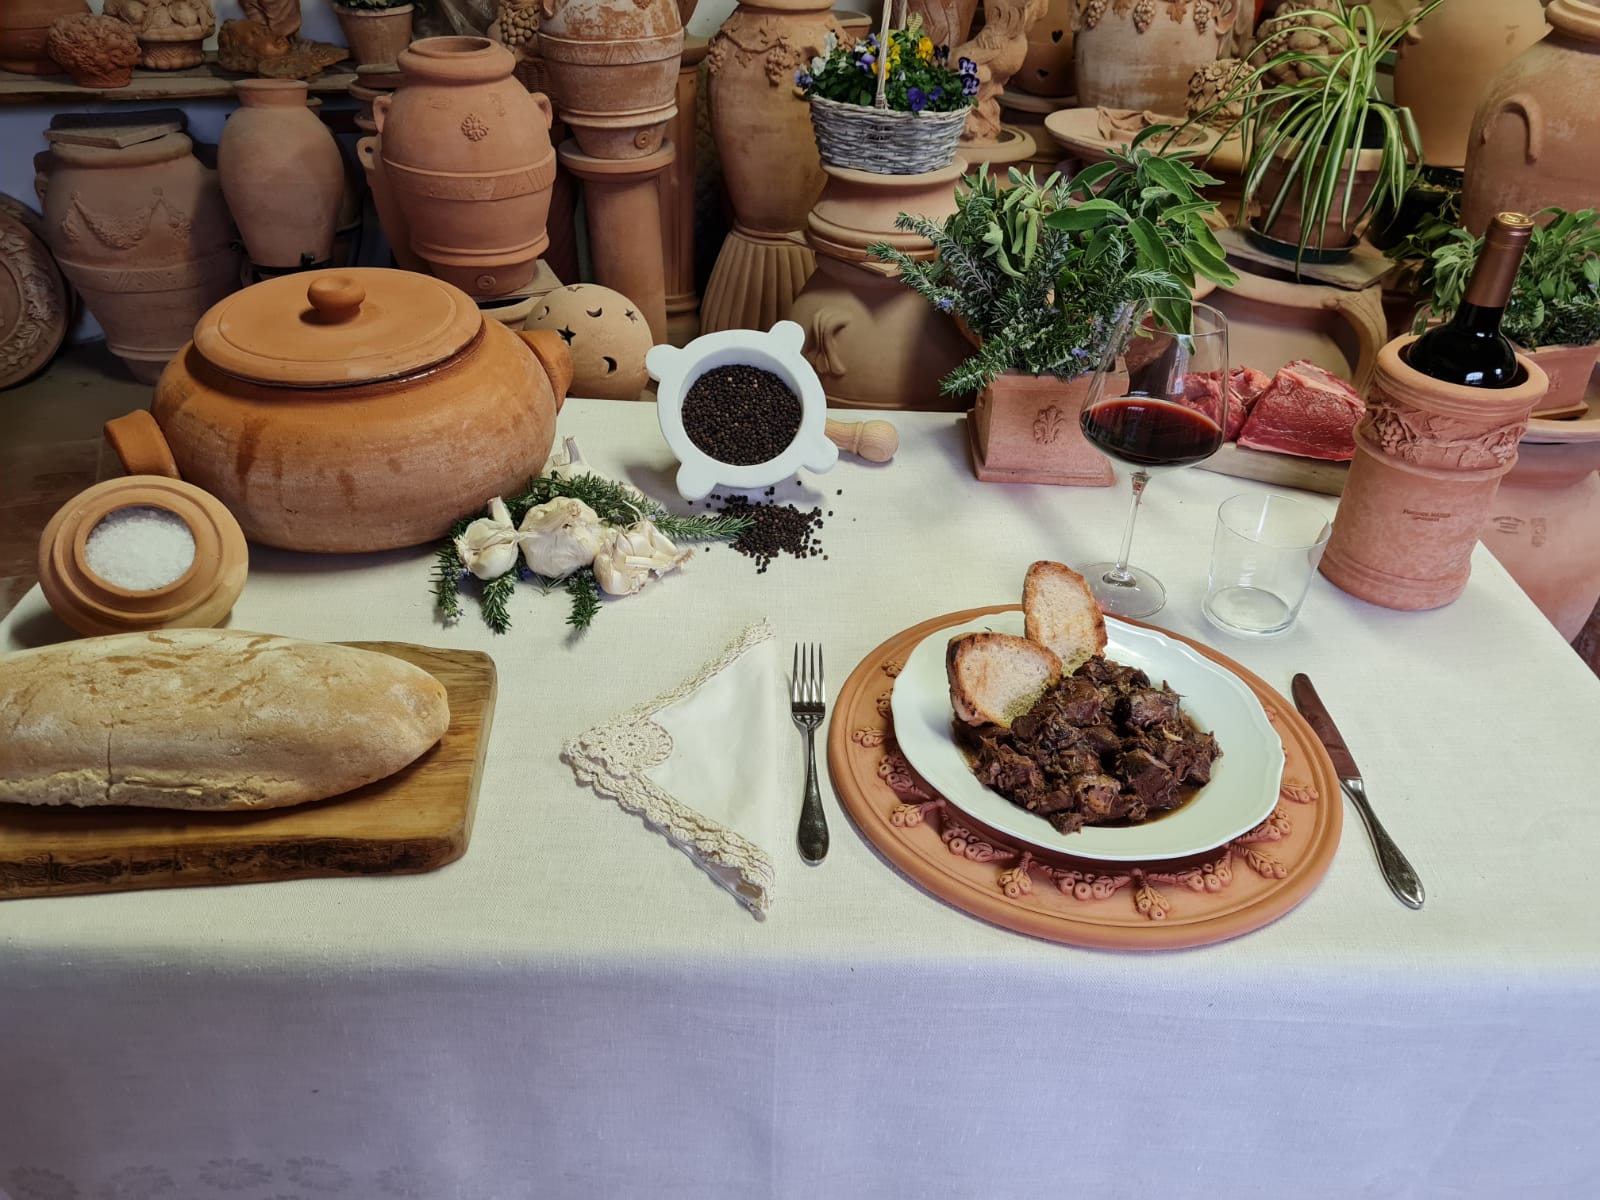 Peposo, typical Tuscan dish